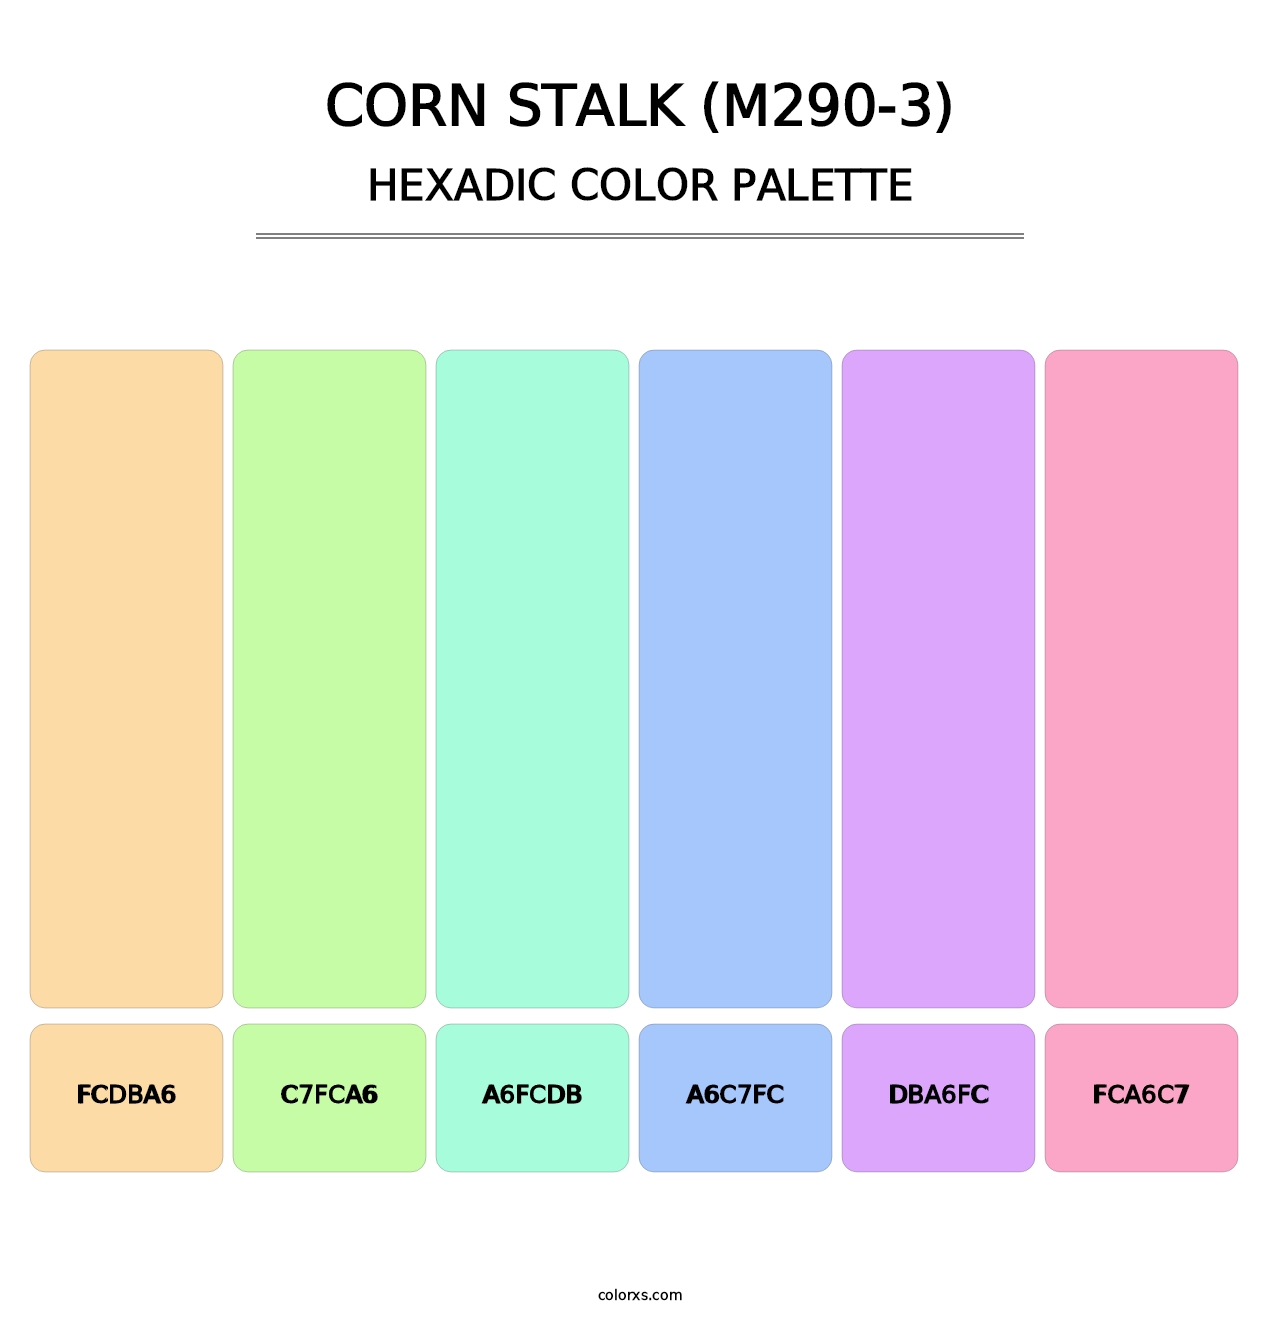 Corn Stalk (M290-3) - Hexadic Color Palette